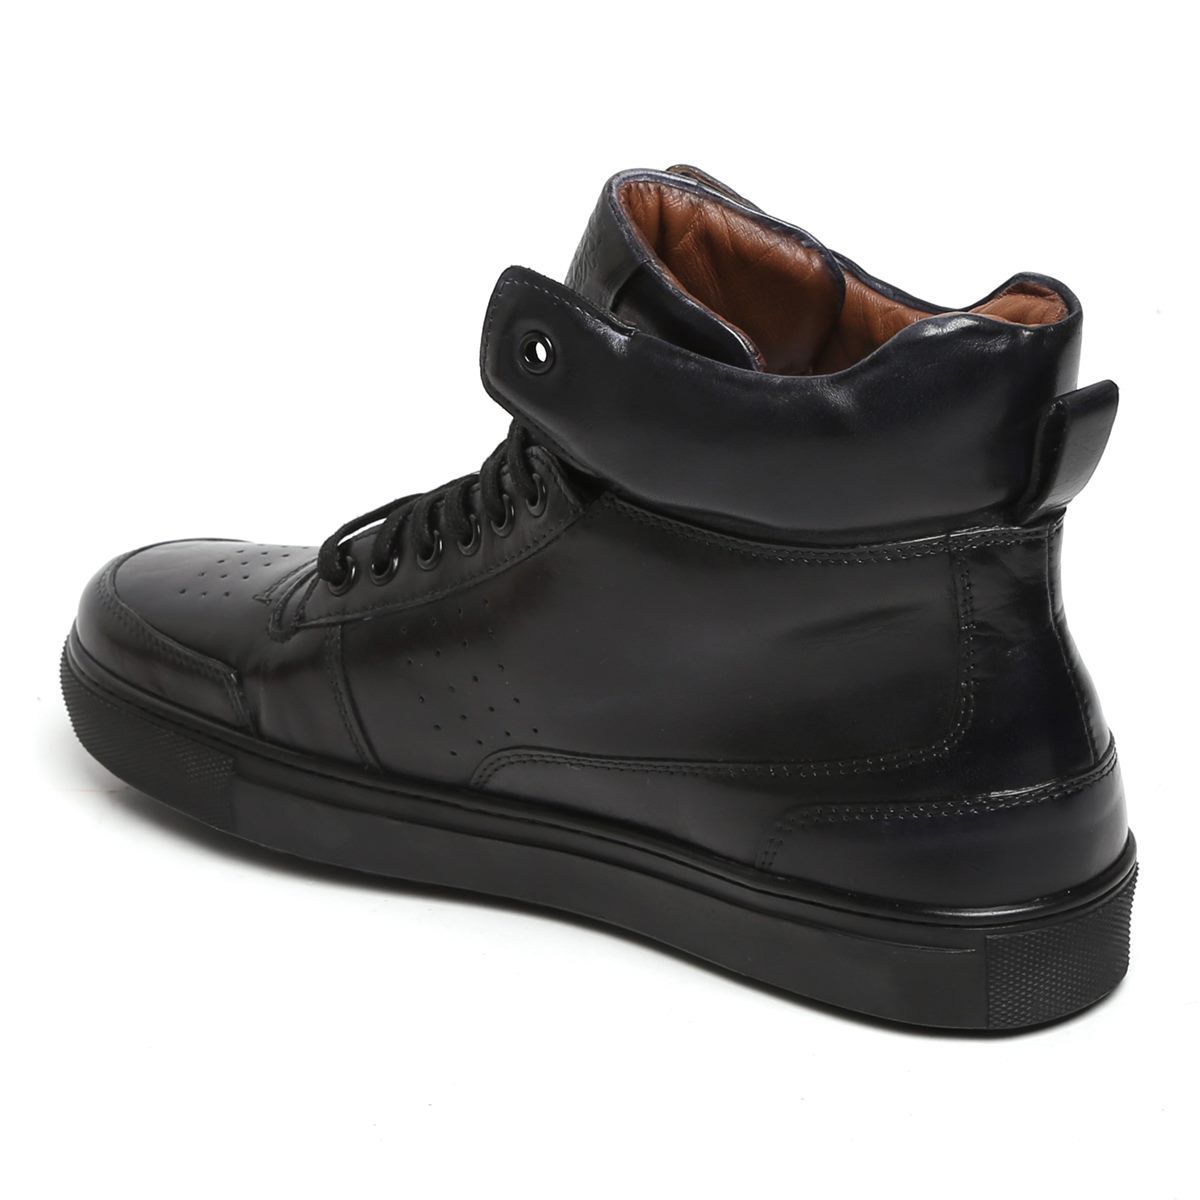 Bareskin Black leather high ankel shoe Lifestyle Black Casual Shoes ...